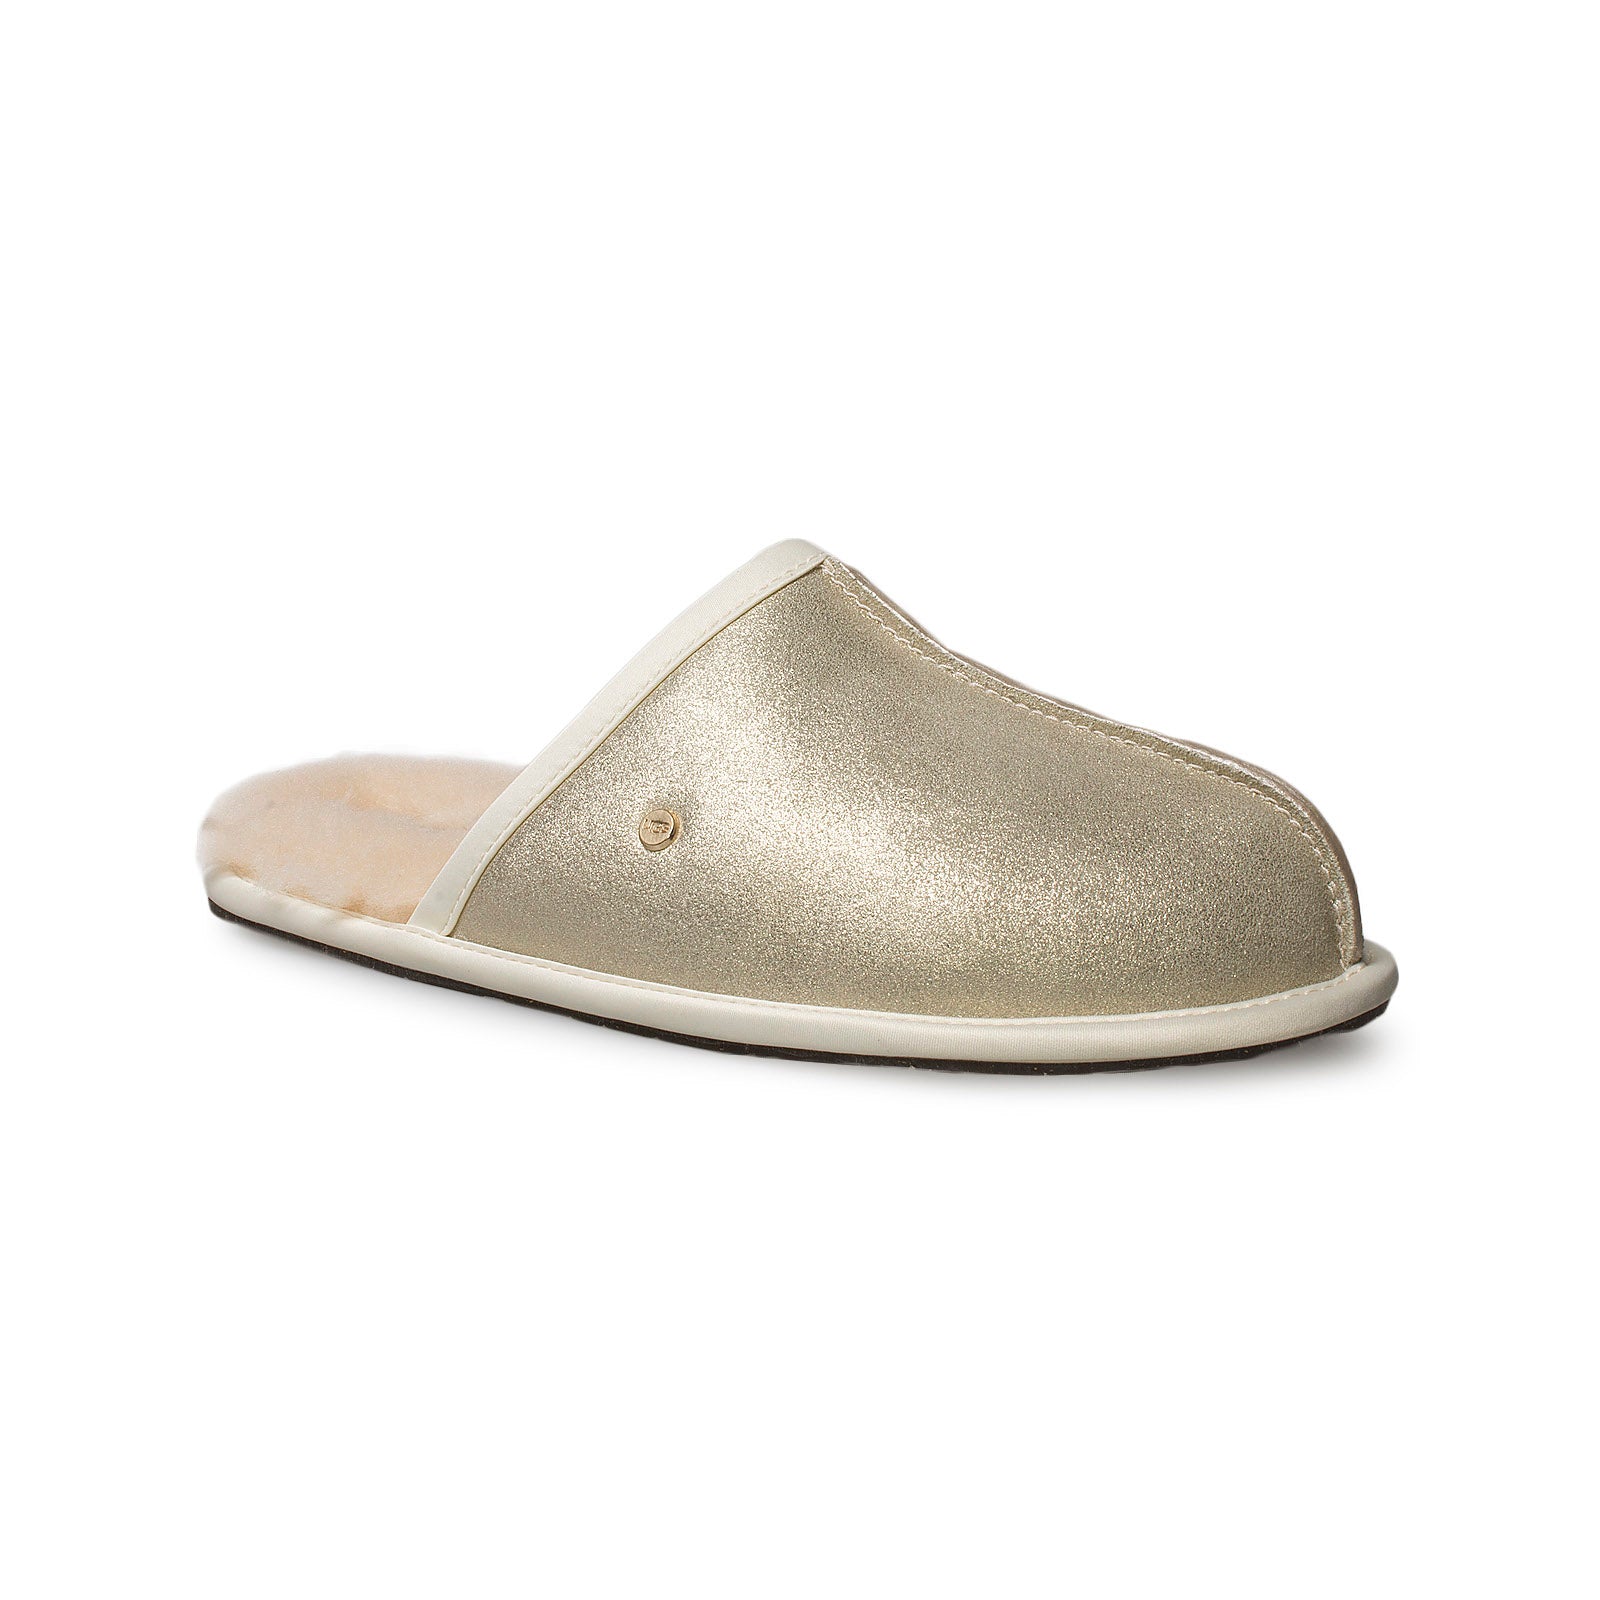 gold sparkle ugg slippers